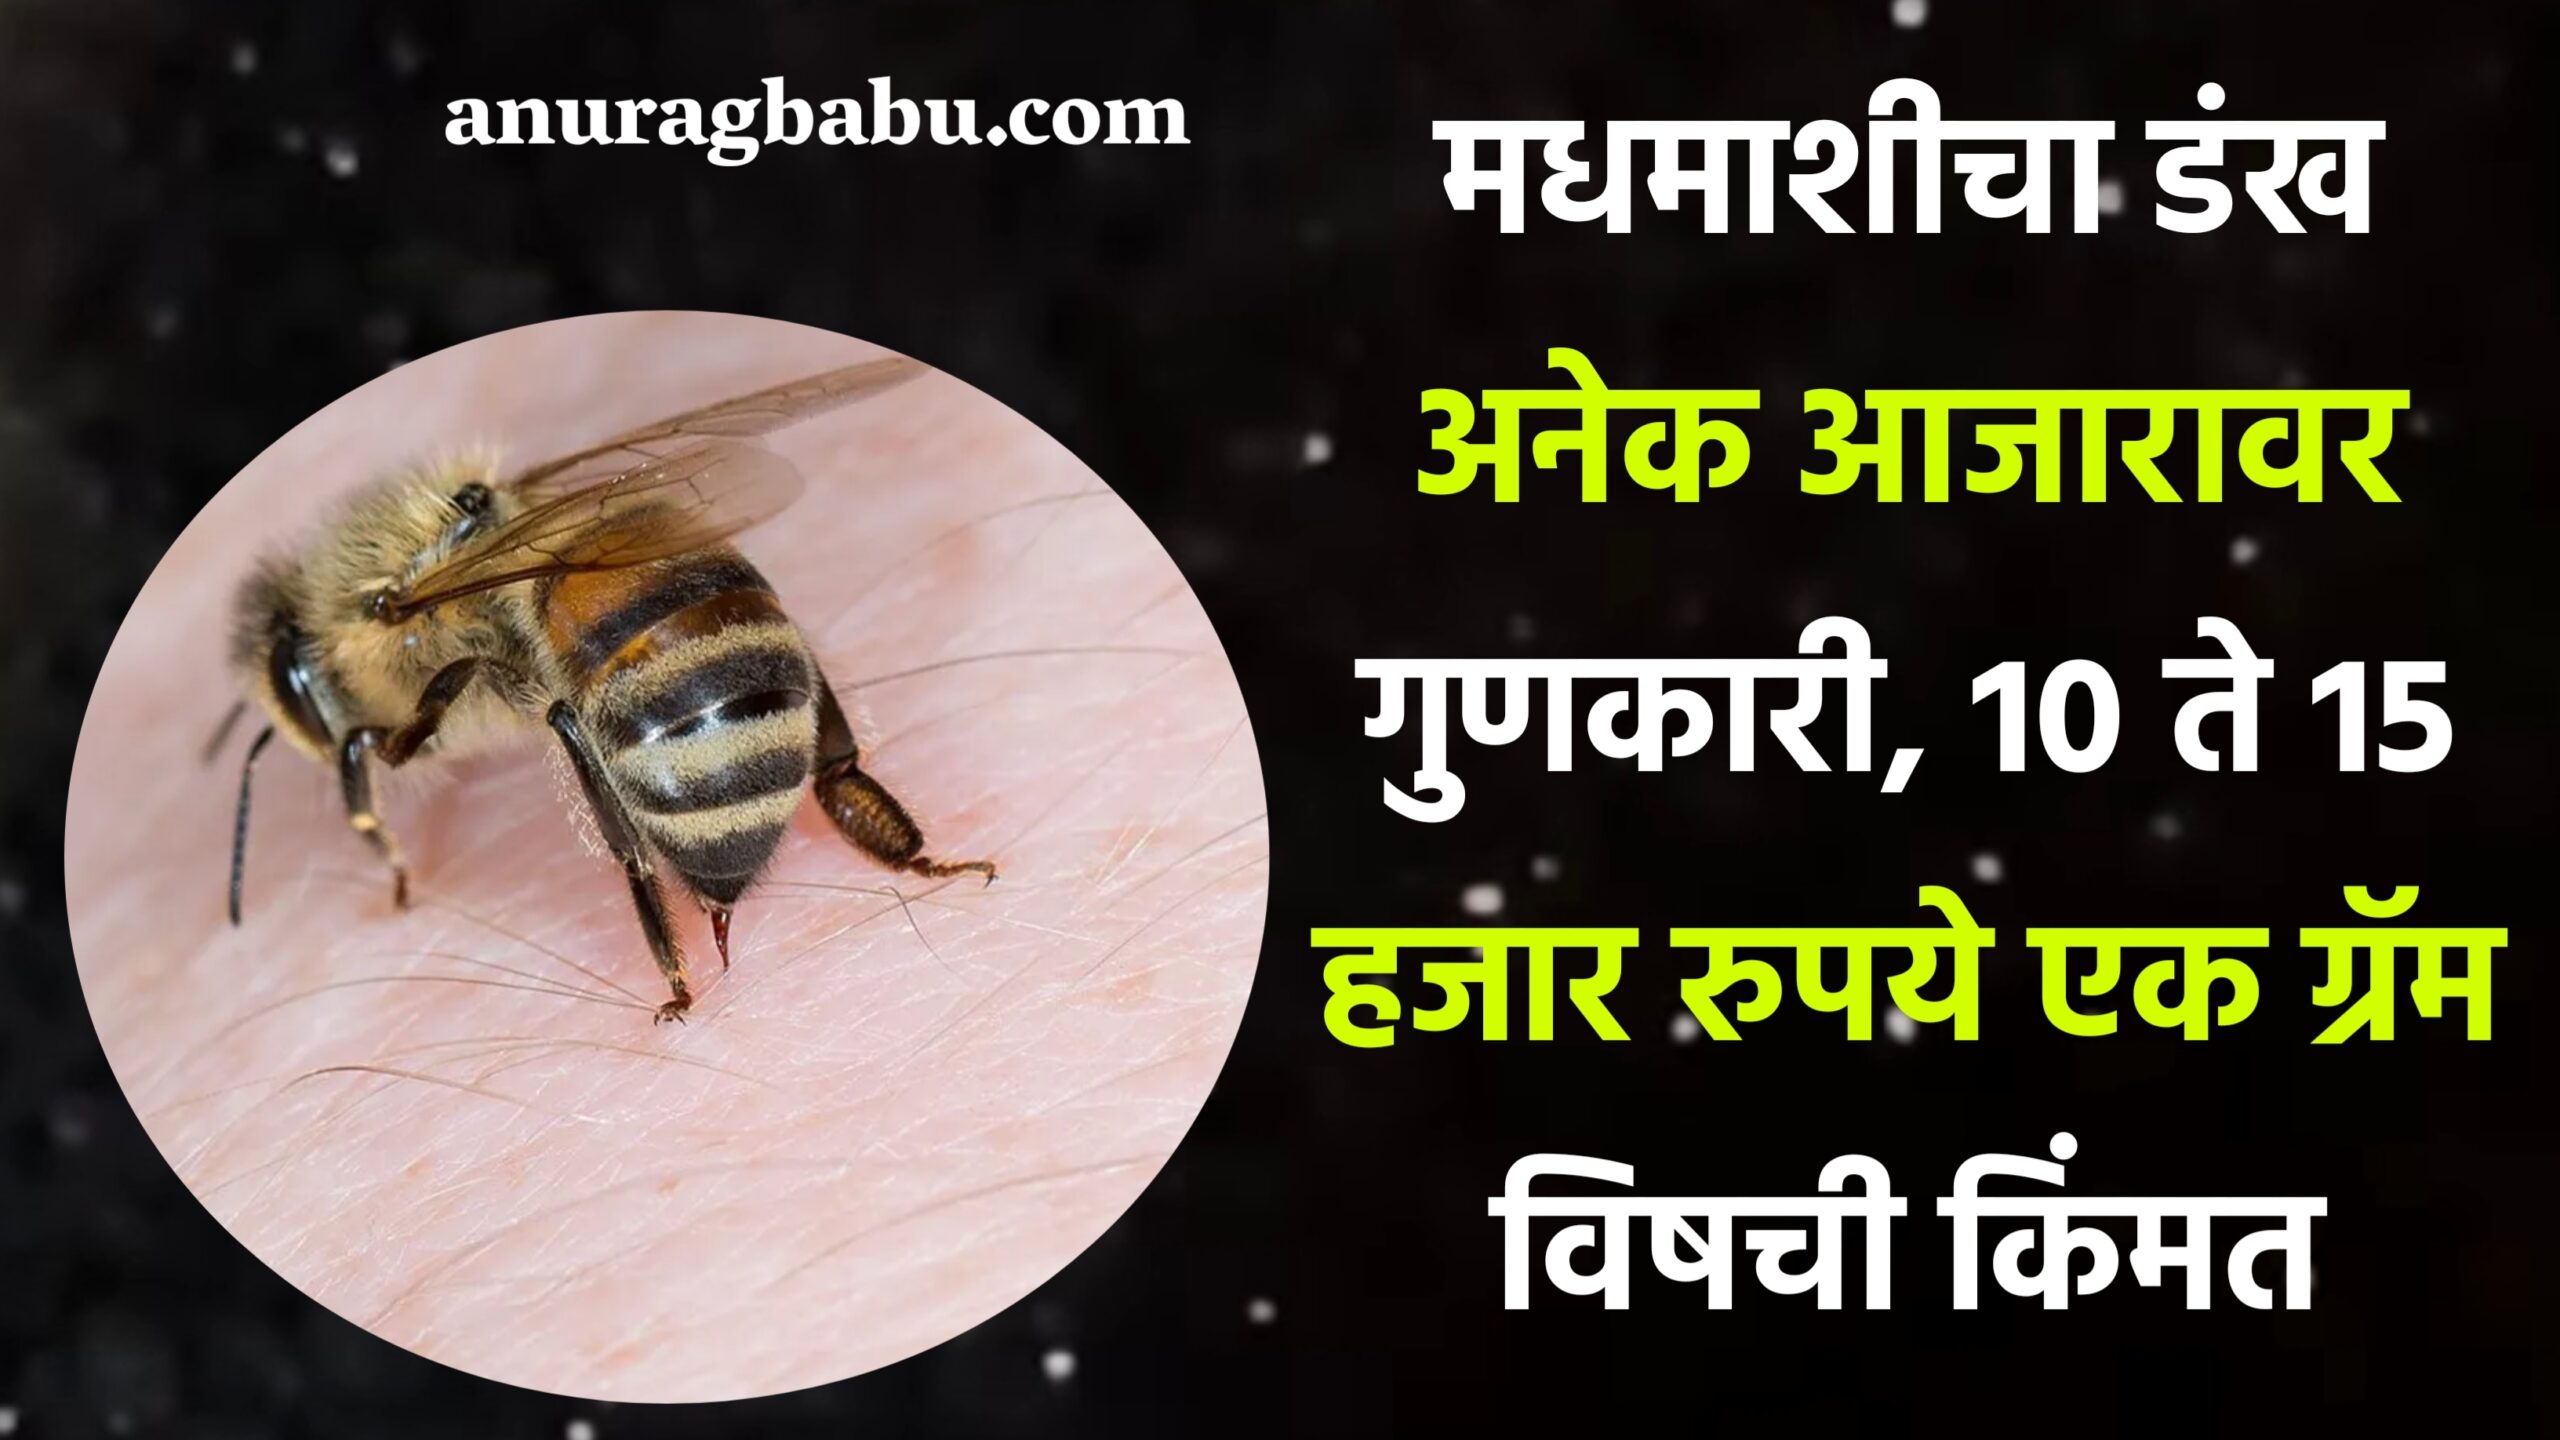 Effective against bee sting disease